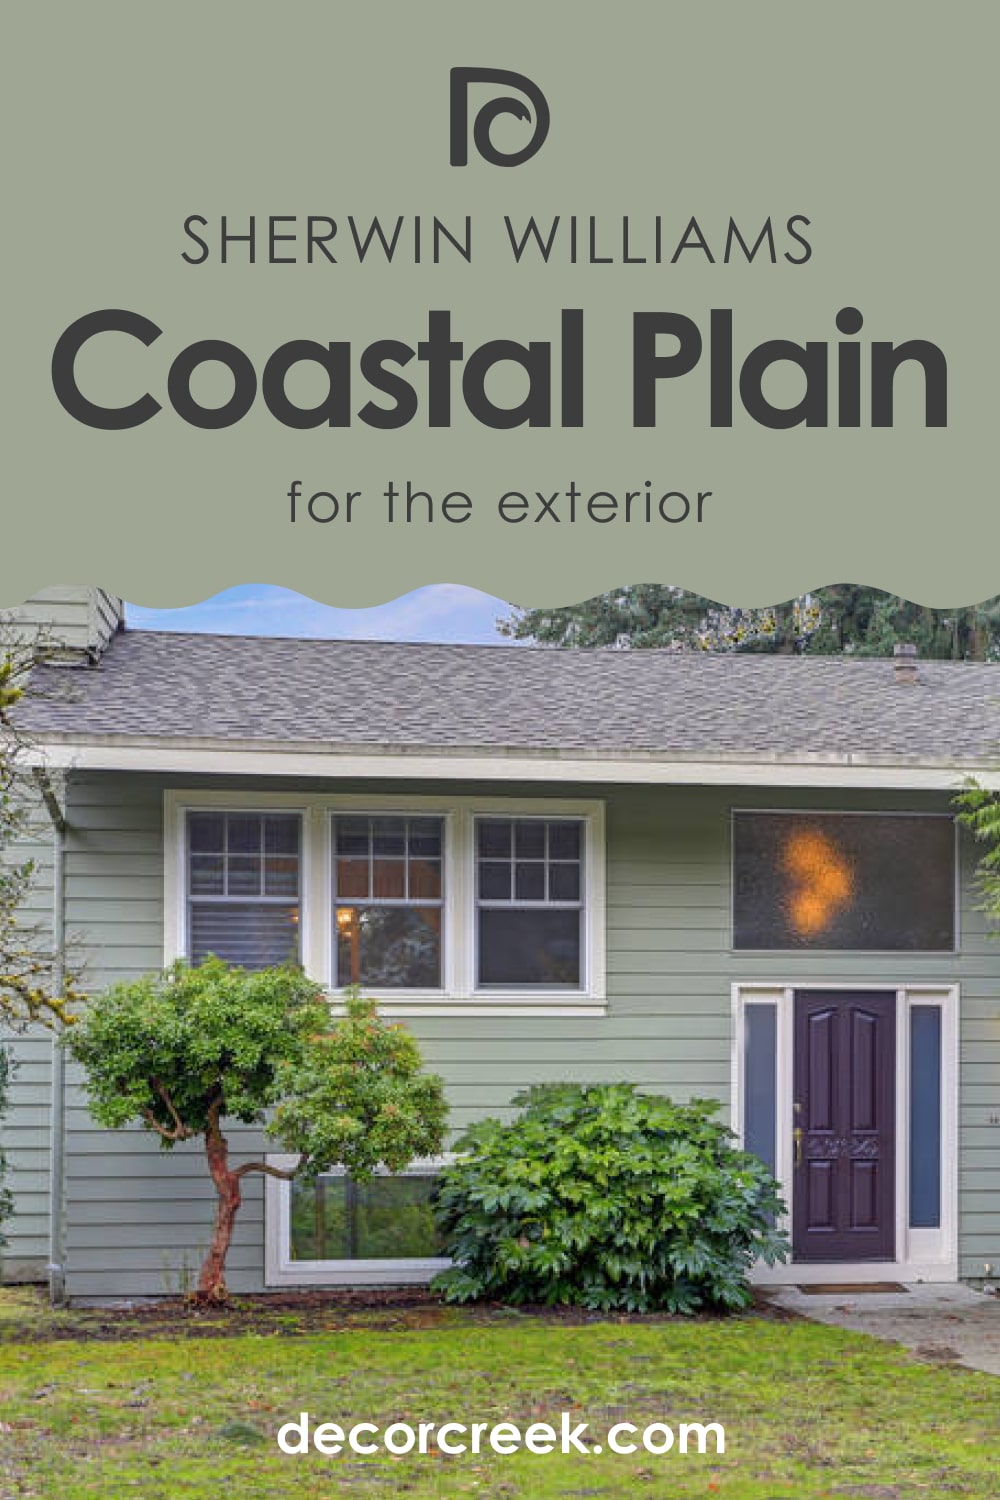 Coastal Plain SW-6192 for the Exterior Use